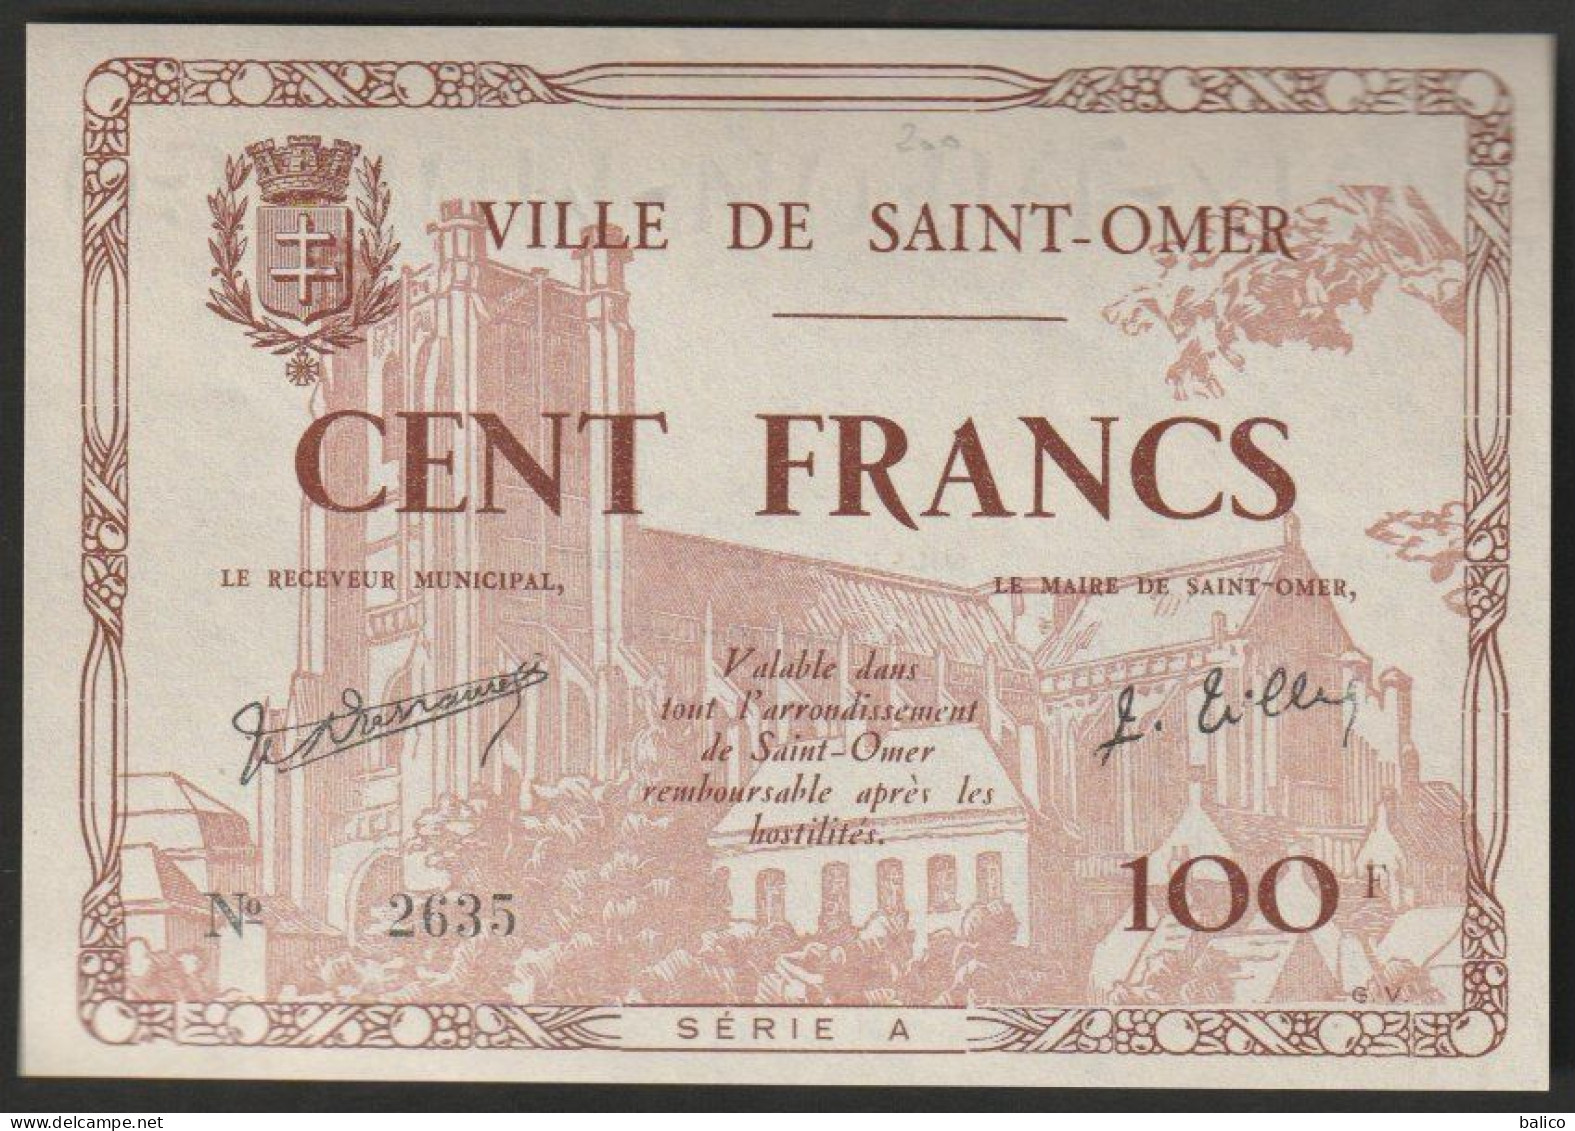 BILLET NECESSITE - VILLE De SAINT-OMER - 100 Francs Série A  émission  N° 2635 - Juin 1940   (superbe, Neuf) - Notgeld